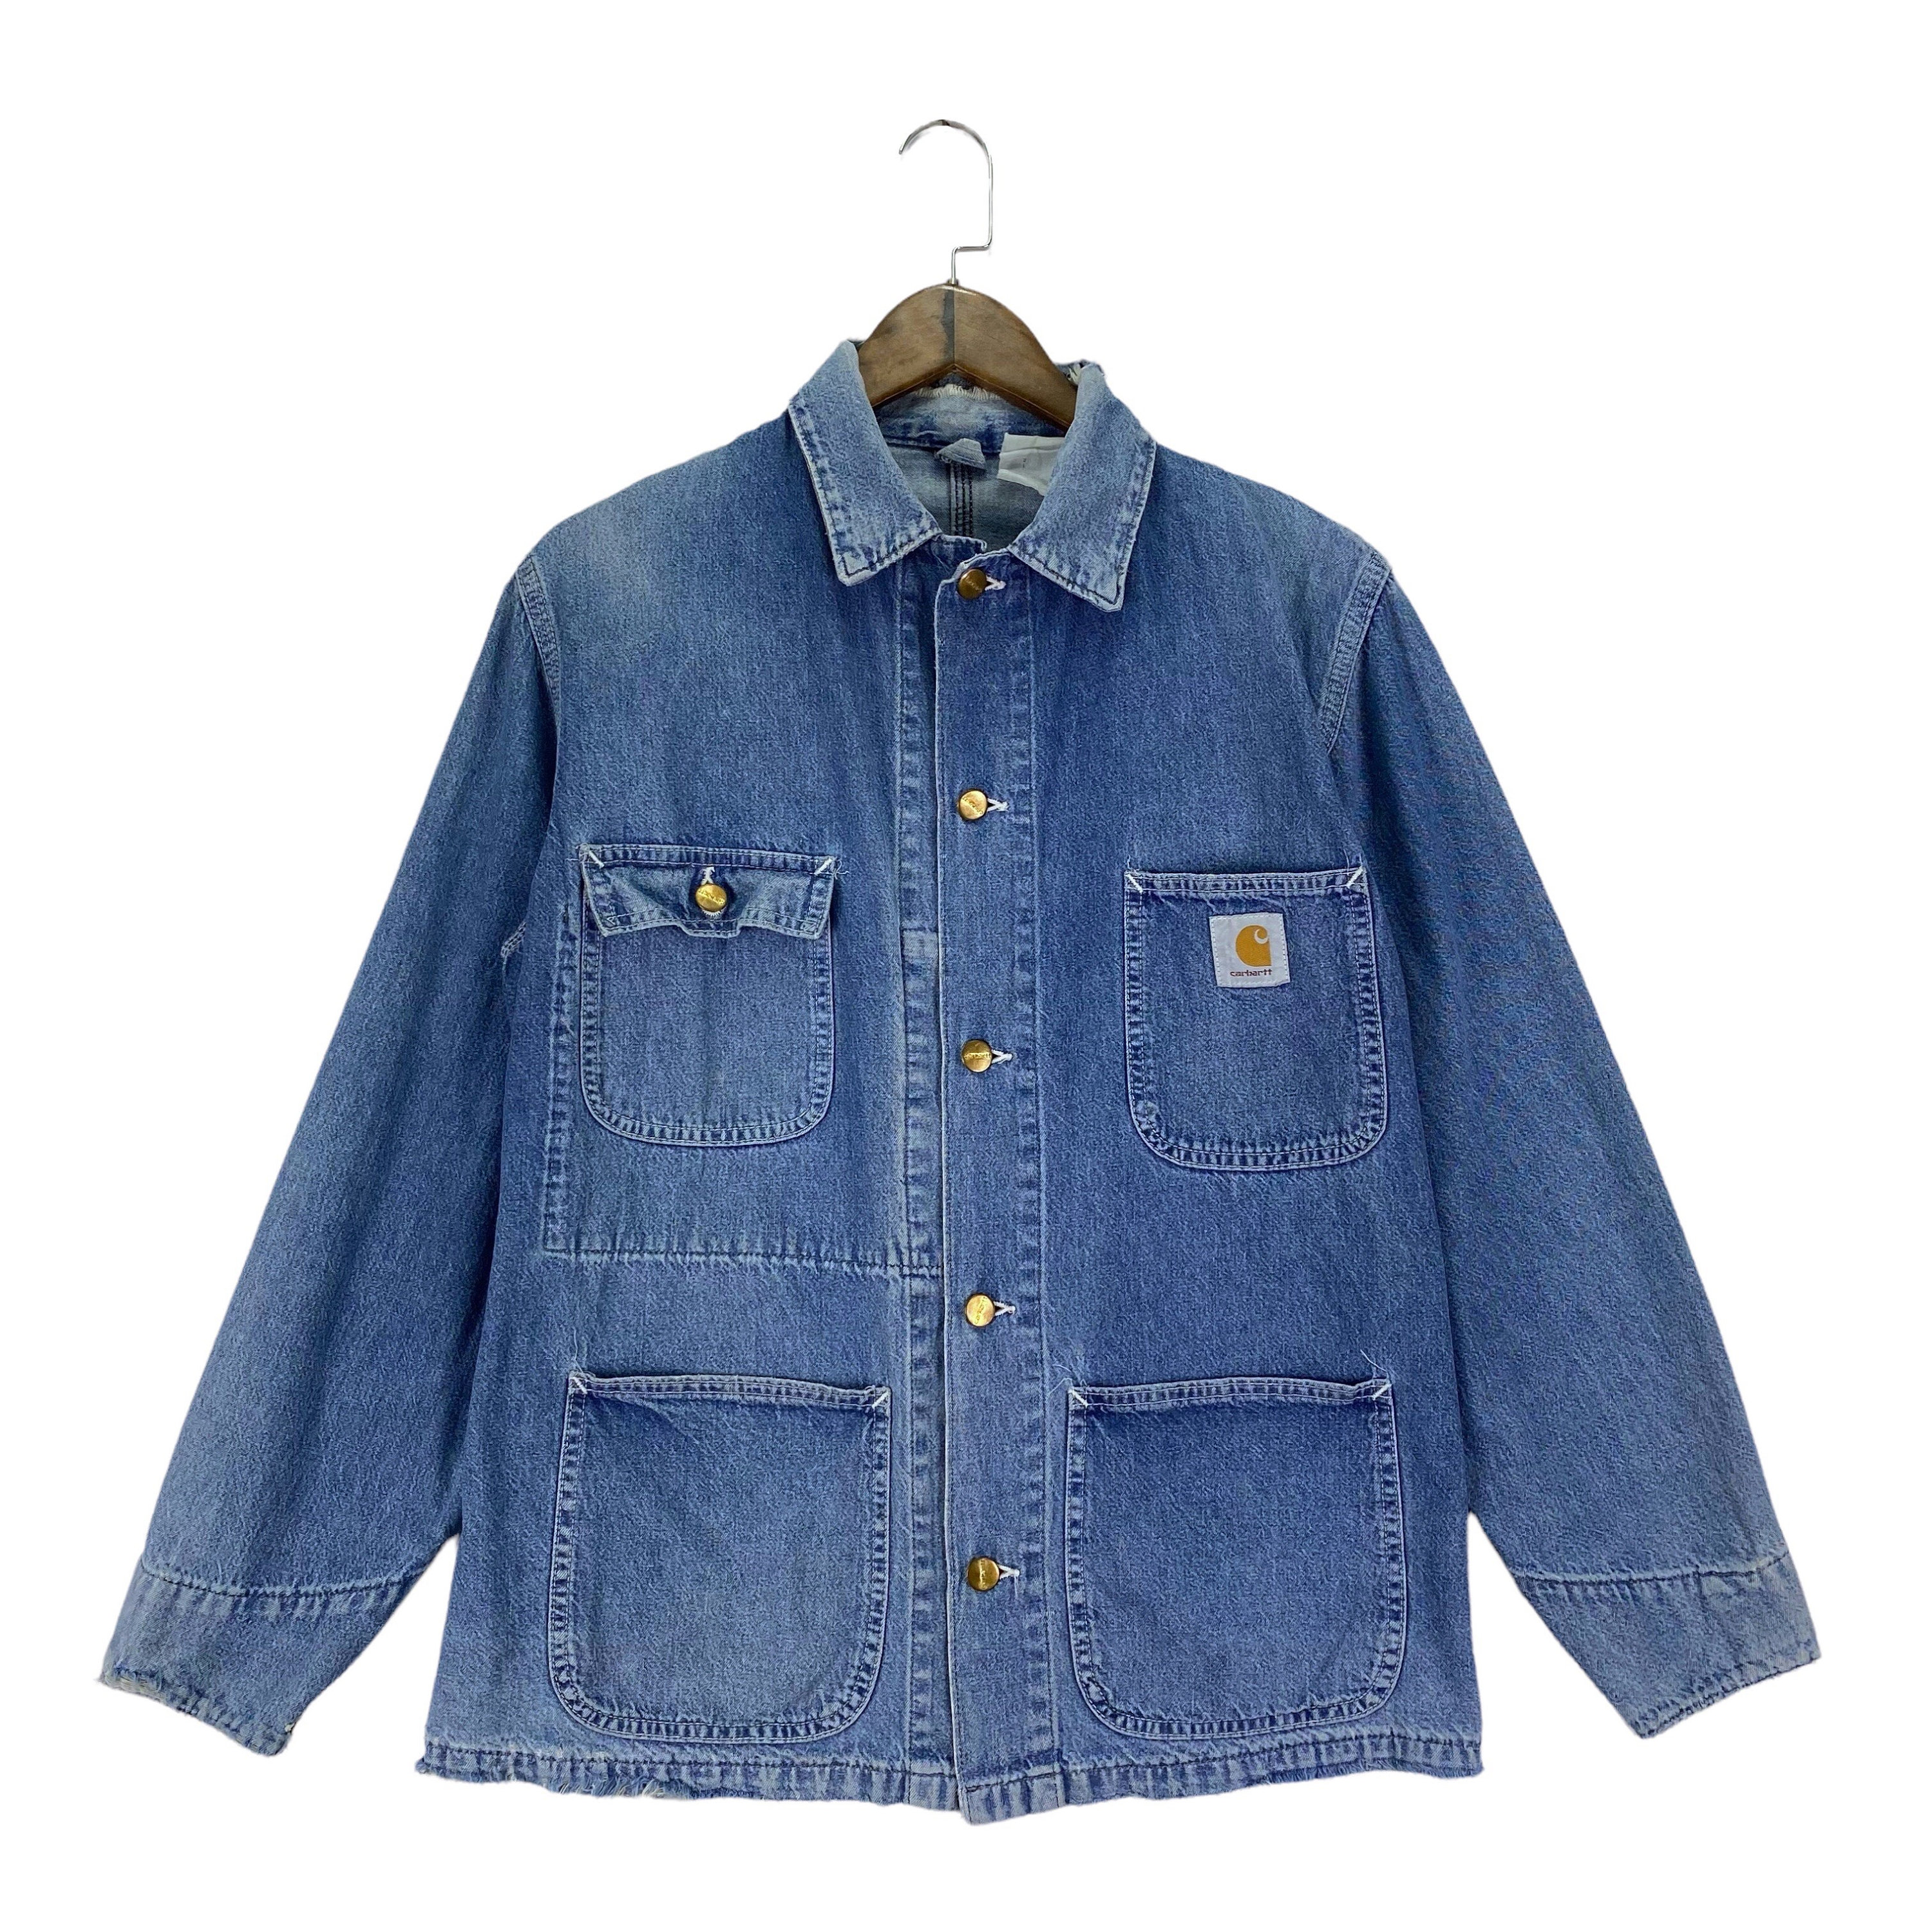 Vintage 90s Carhartt Chore Denim Jacket Workwear Jeans Faded 